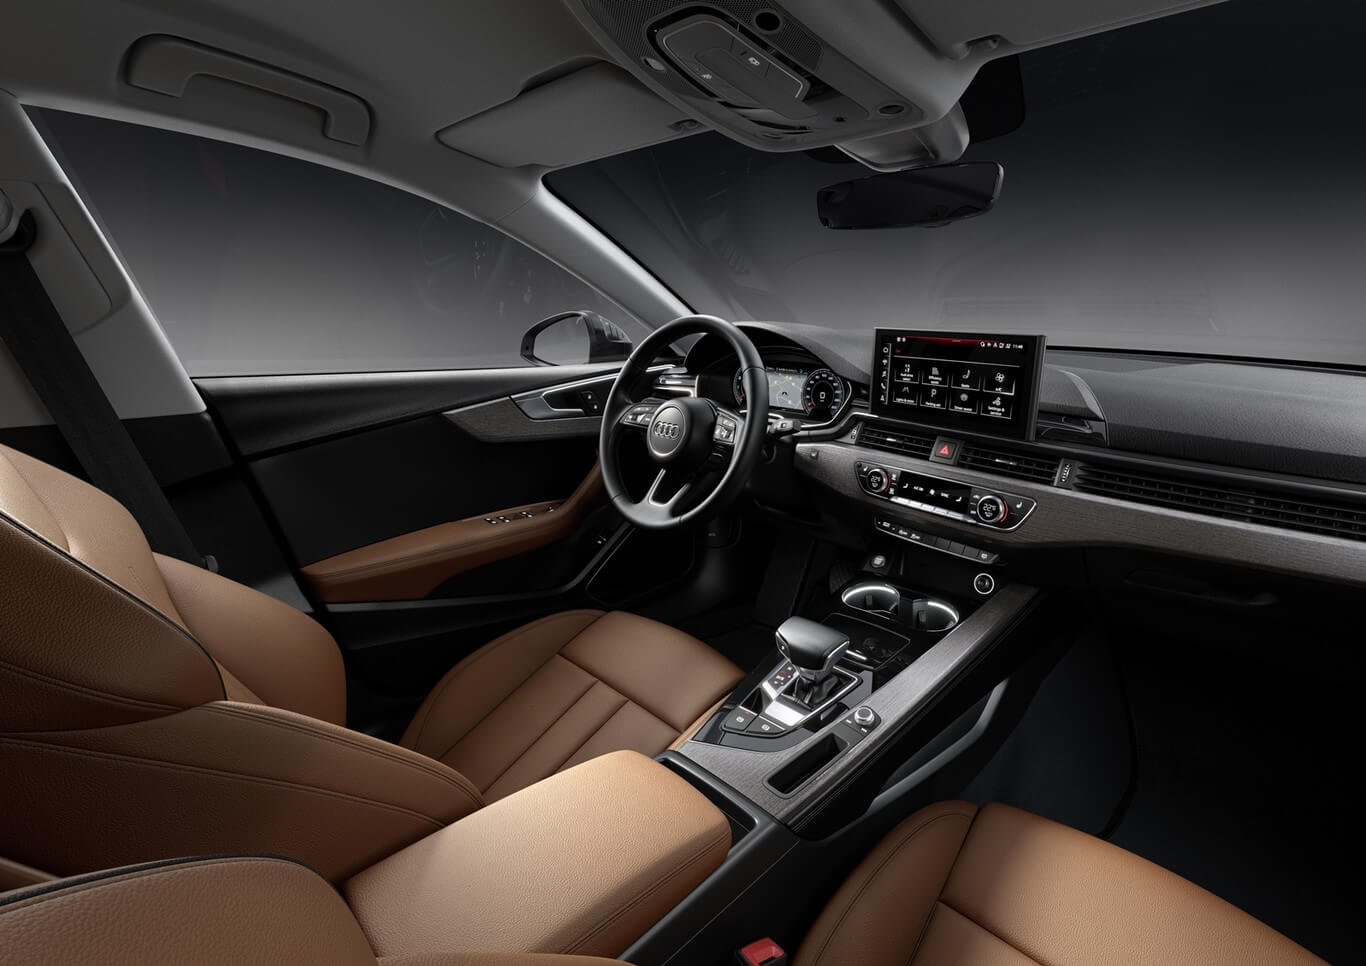 Audi A5 2020, interior.